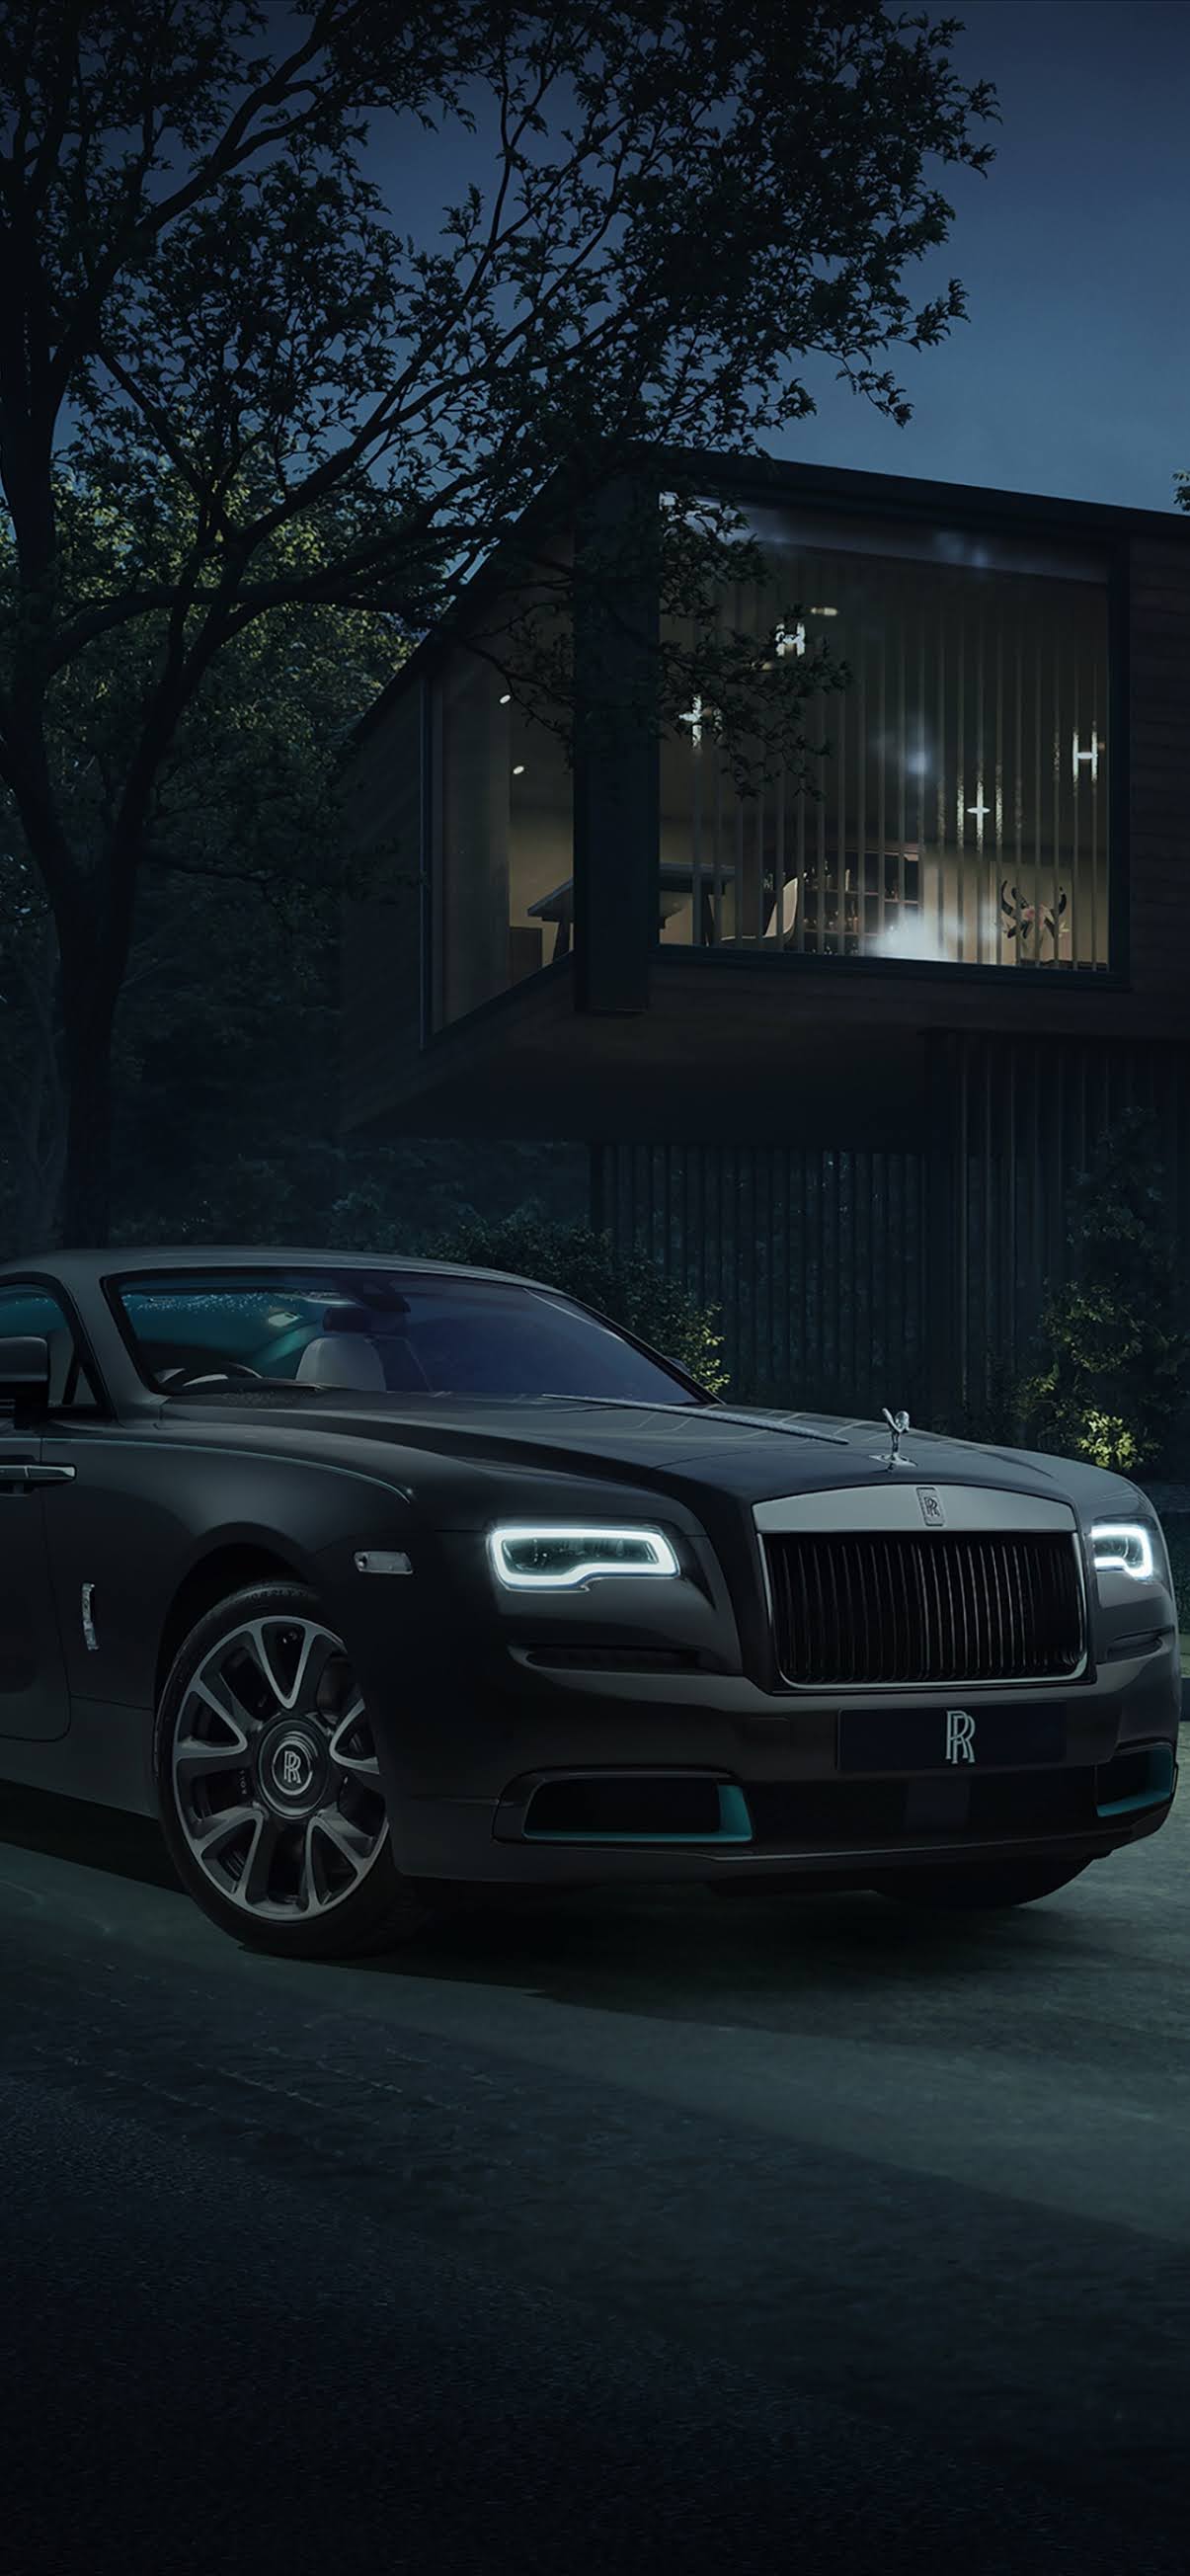 Black Rolls Royce Mobile Wallpaper, luxury car Mobile Walls